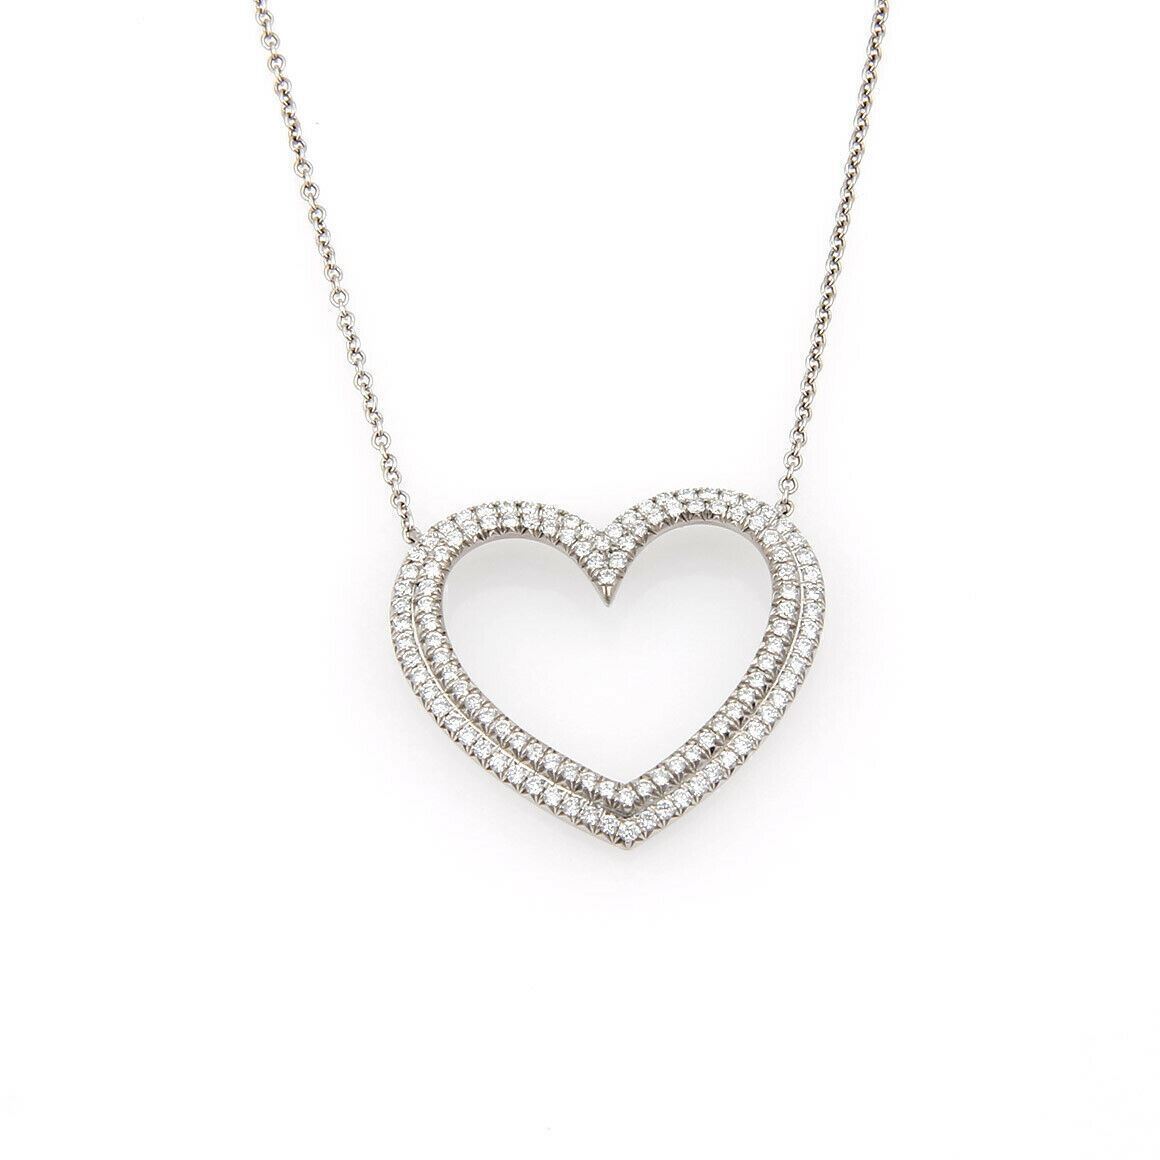 Tiffany & Co. Large Metro Diamond Platinum Heart Pendant Necklace | Necklaces | catalog, Designer Jewelry, Metro, Necklaces, Pendants, Tiffany & Co. | Tiffany & Co.